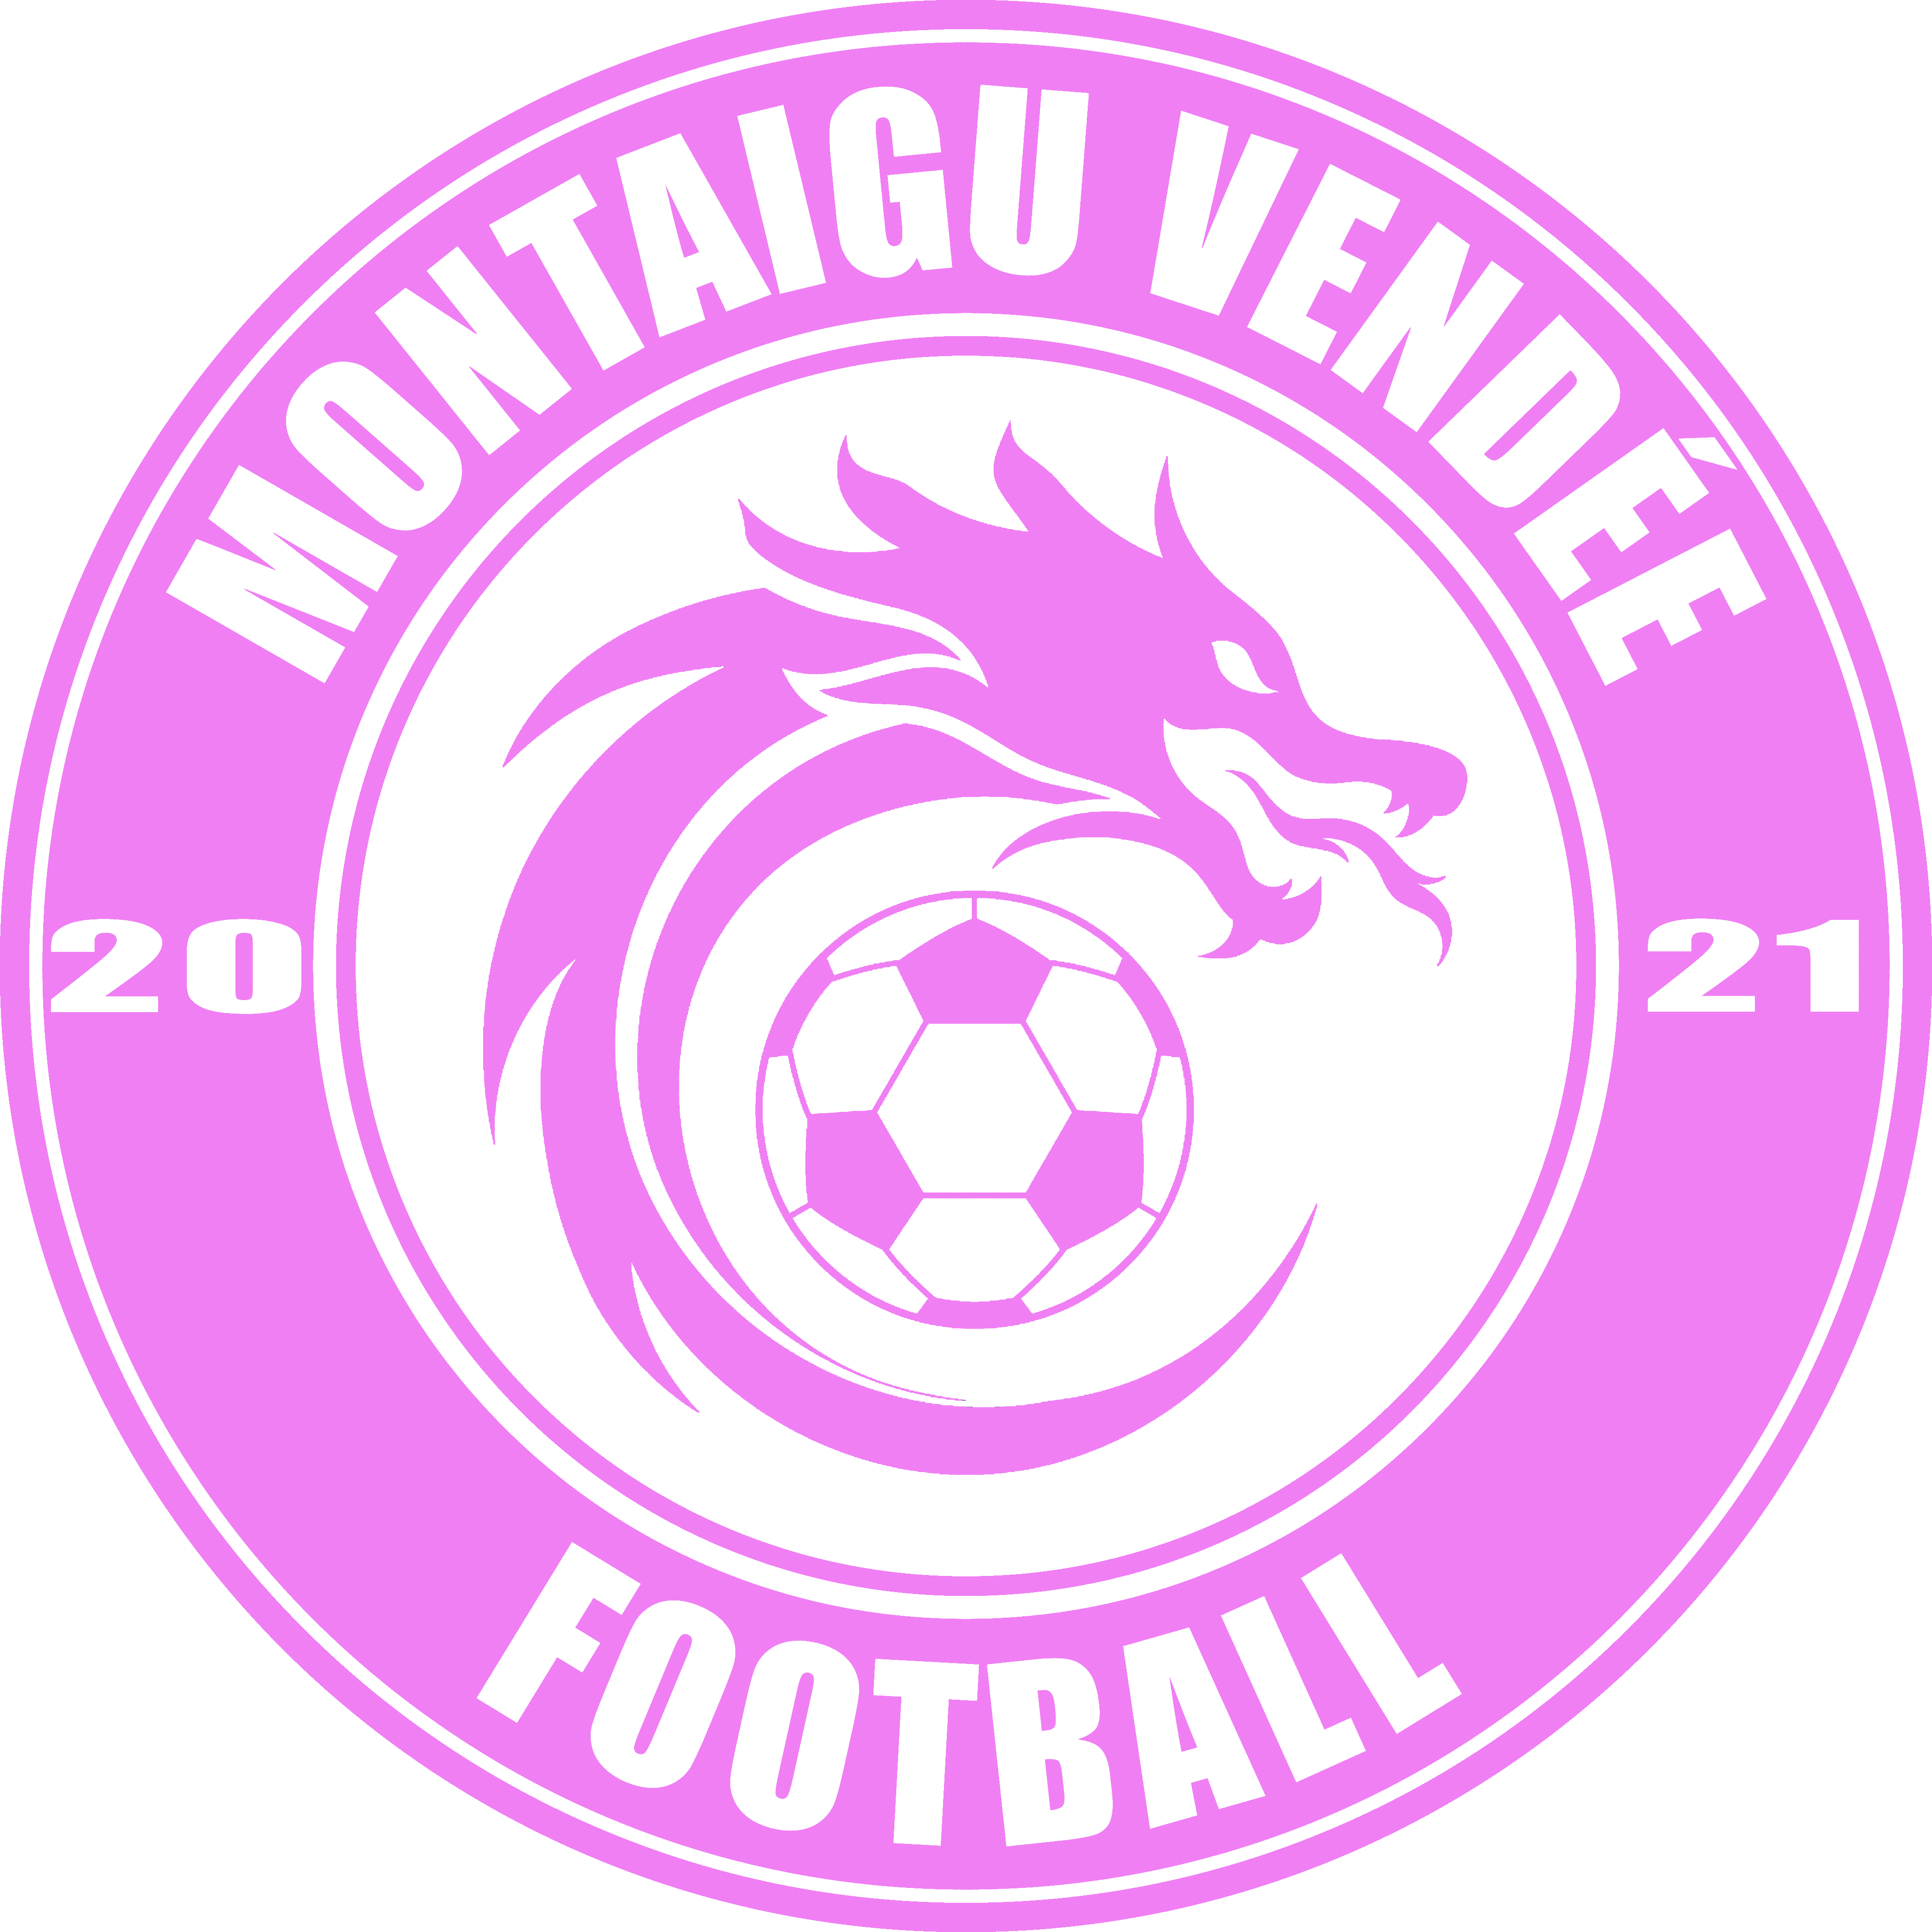 Montaigu Vendée Football